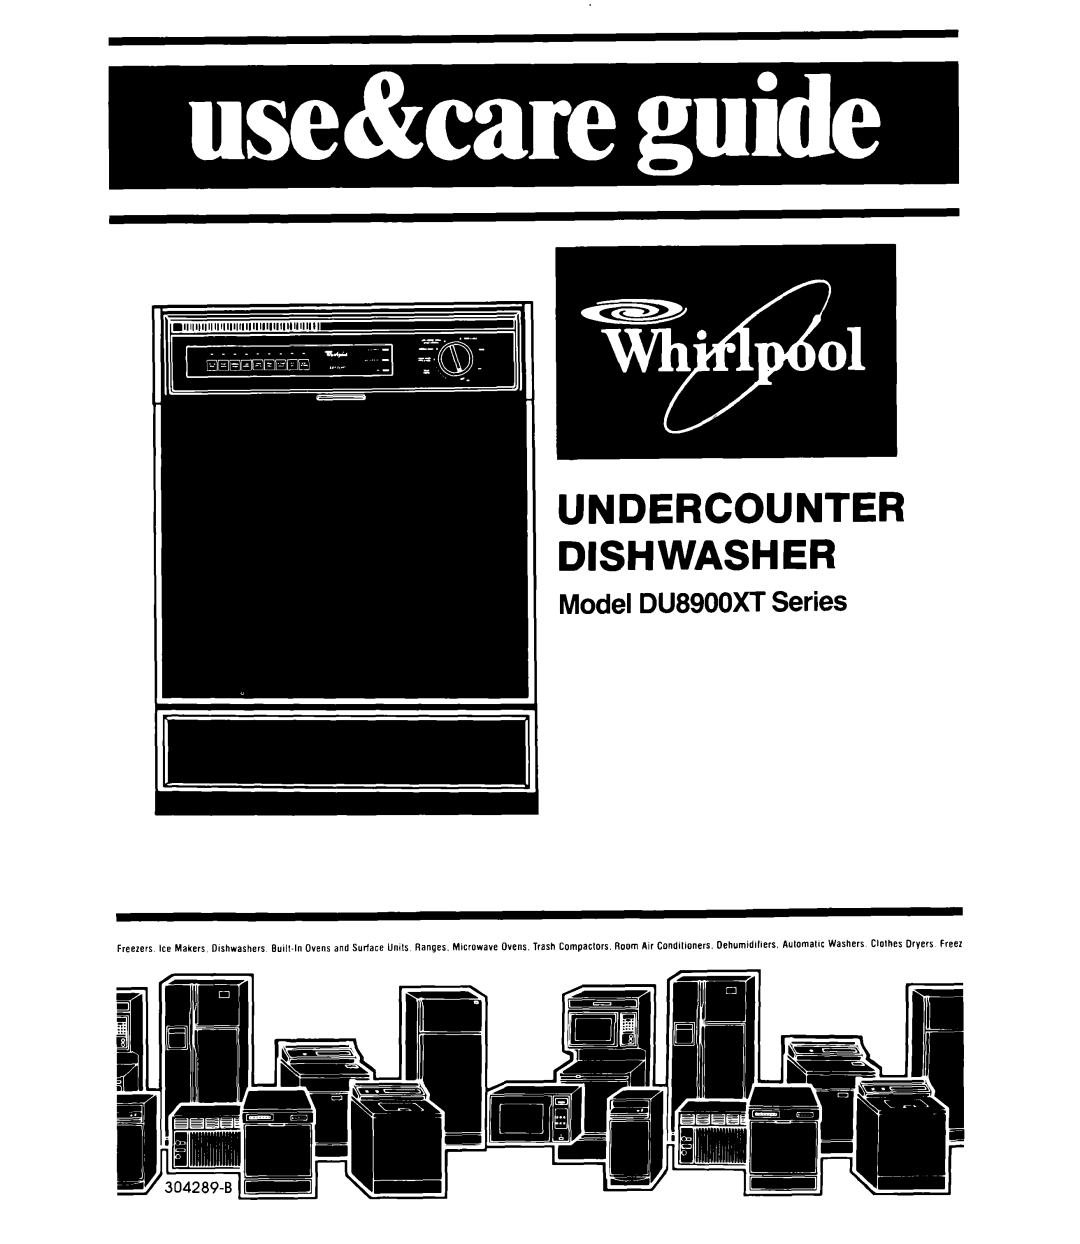 Whirlpool manual Model DU8900XT Series, Undercounter Dishwasher 